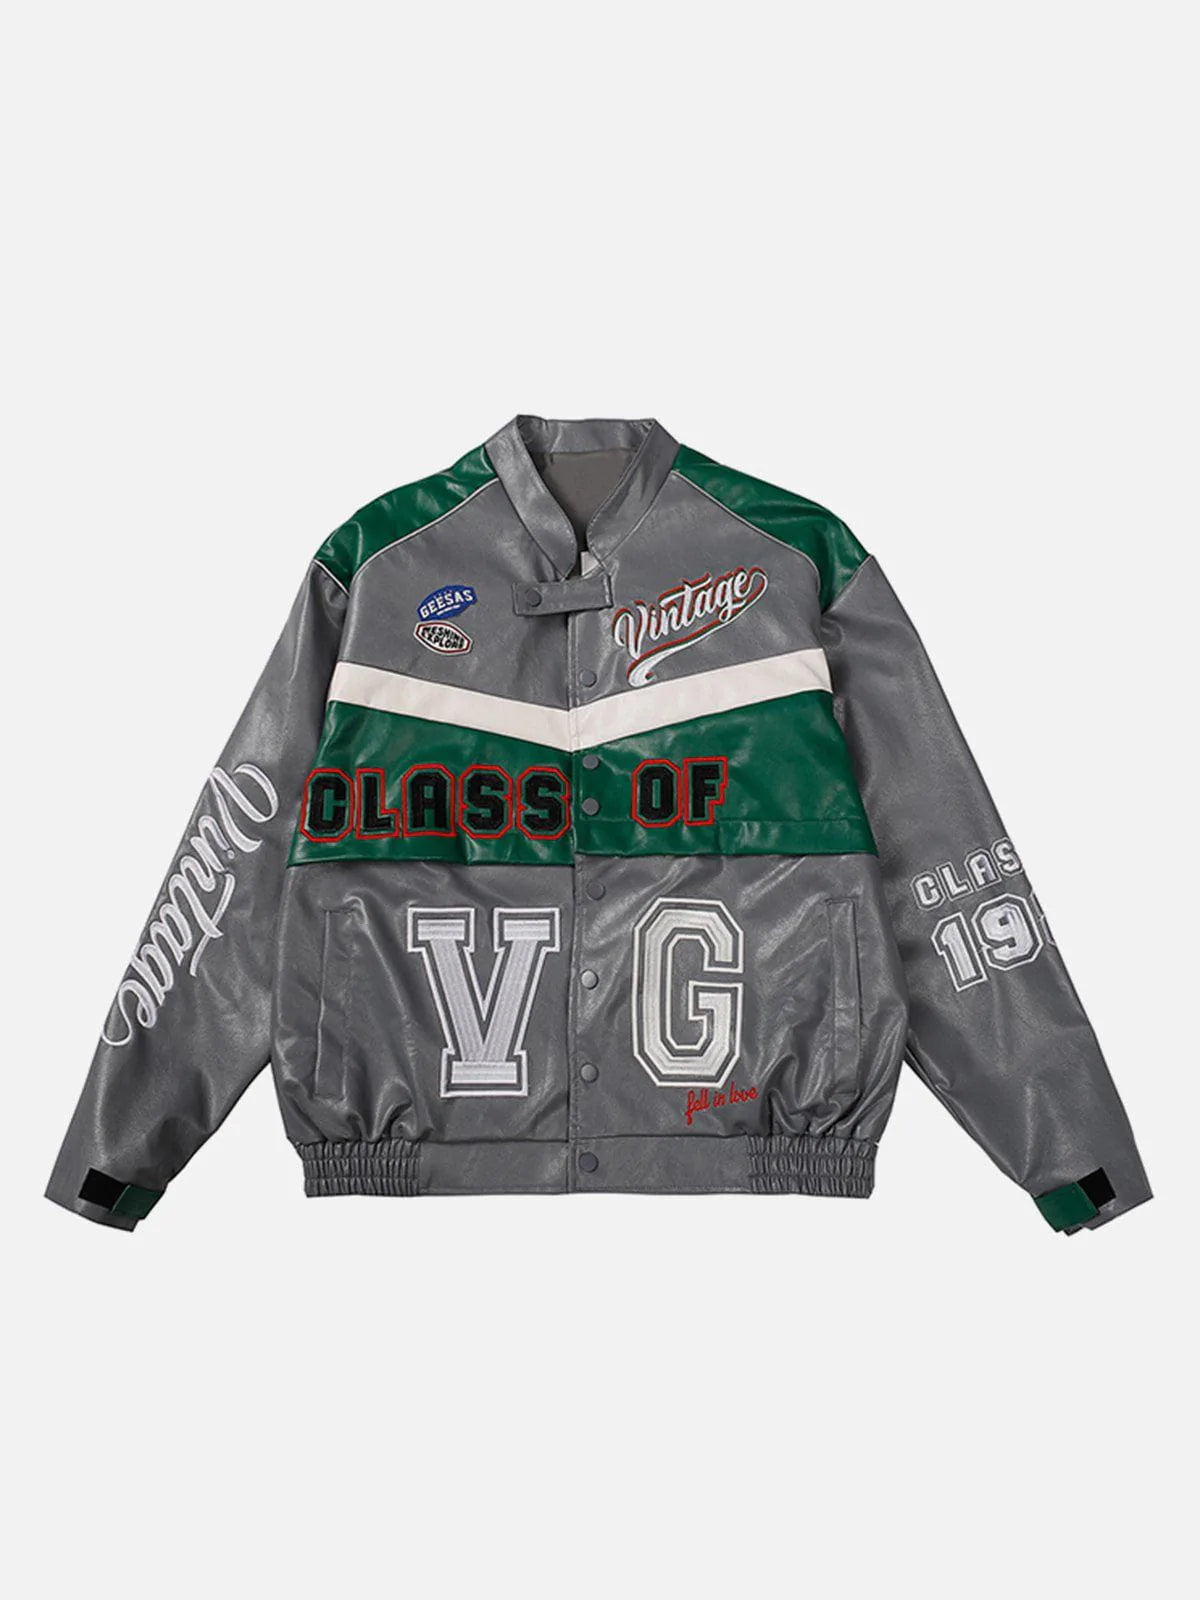 Faire Echo "VG" Detachable PU Racing Jacket